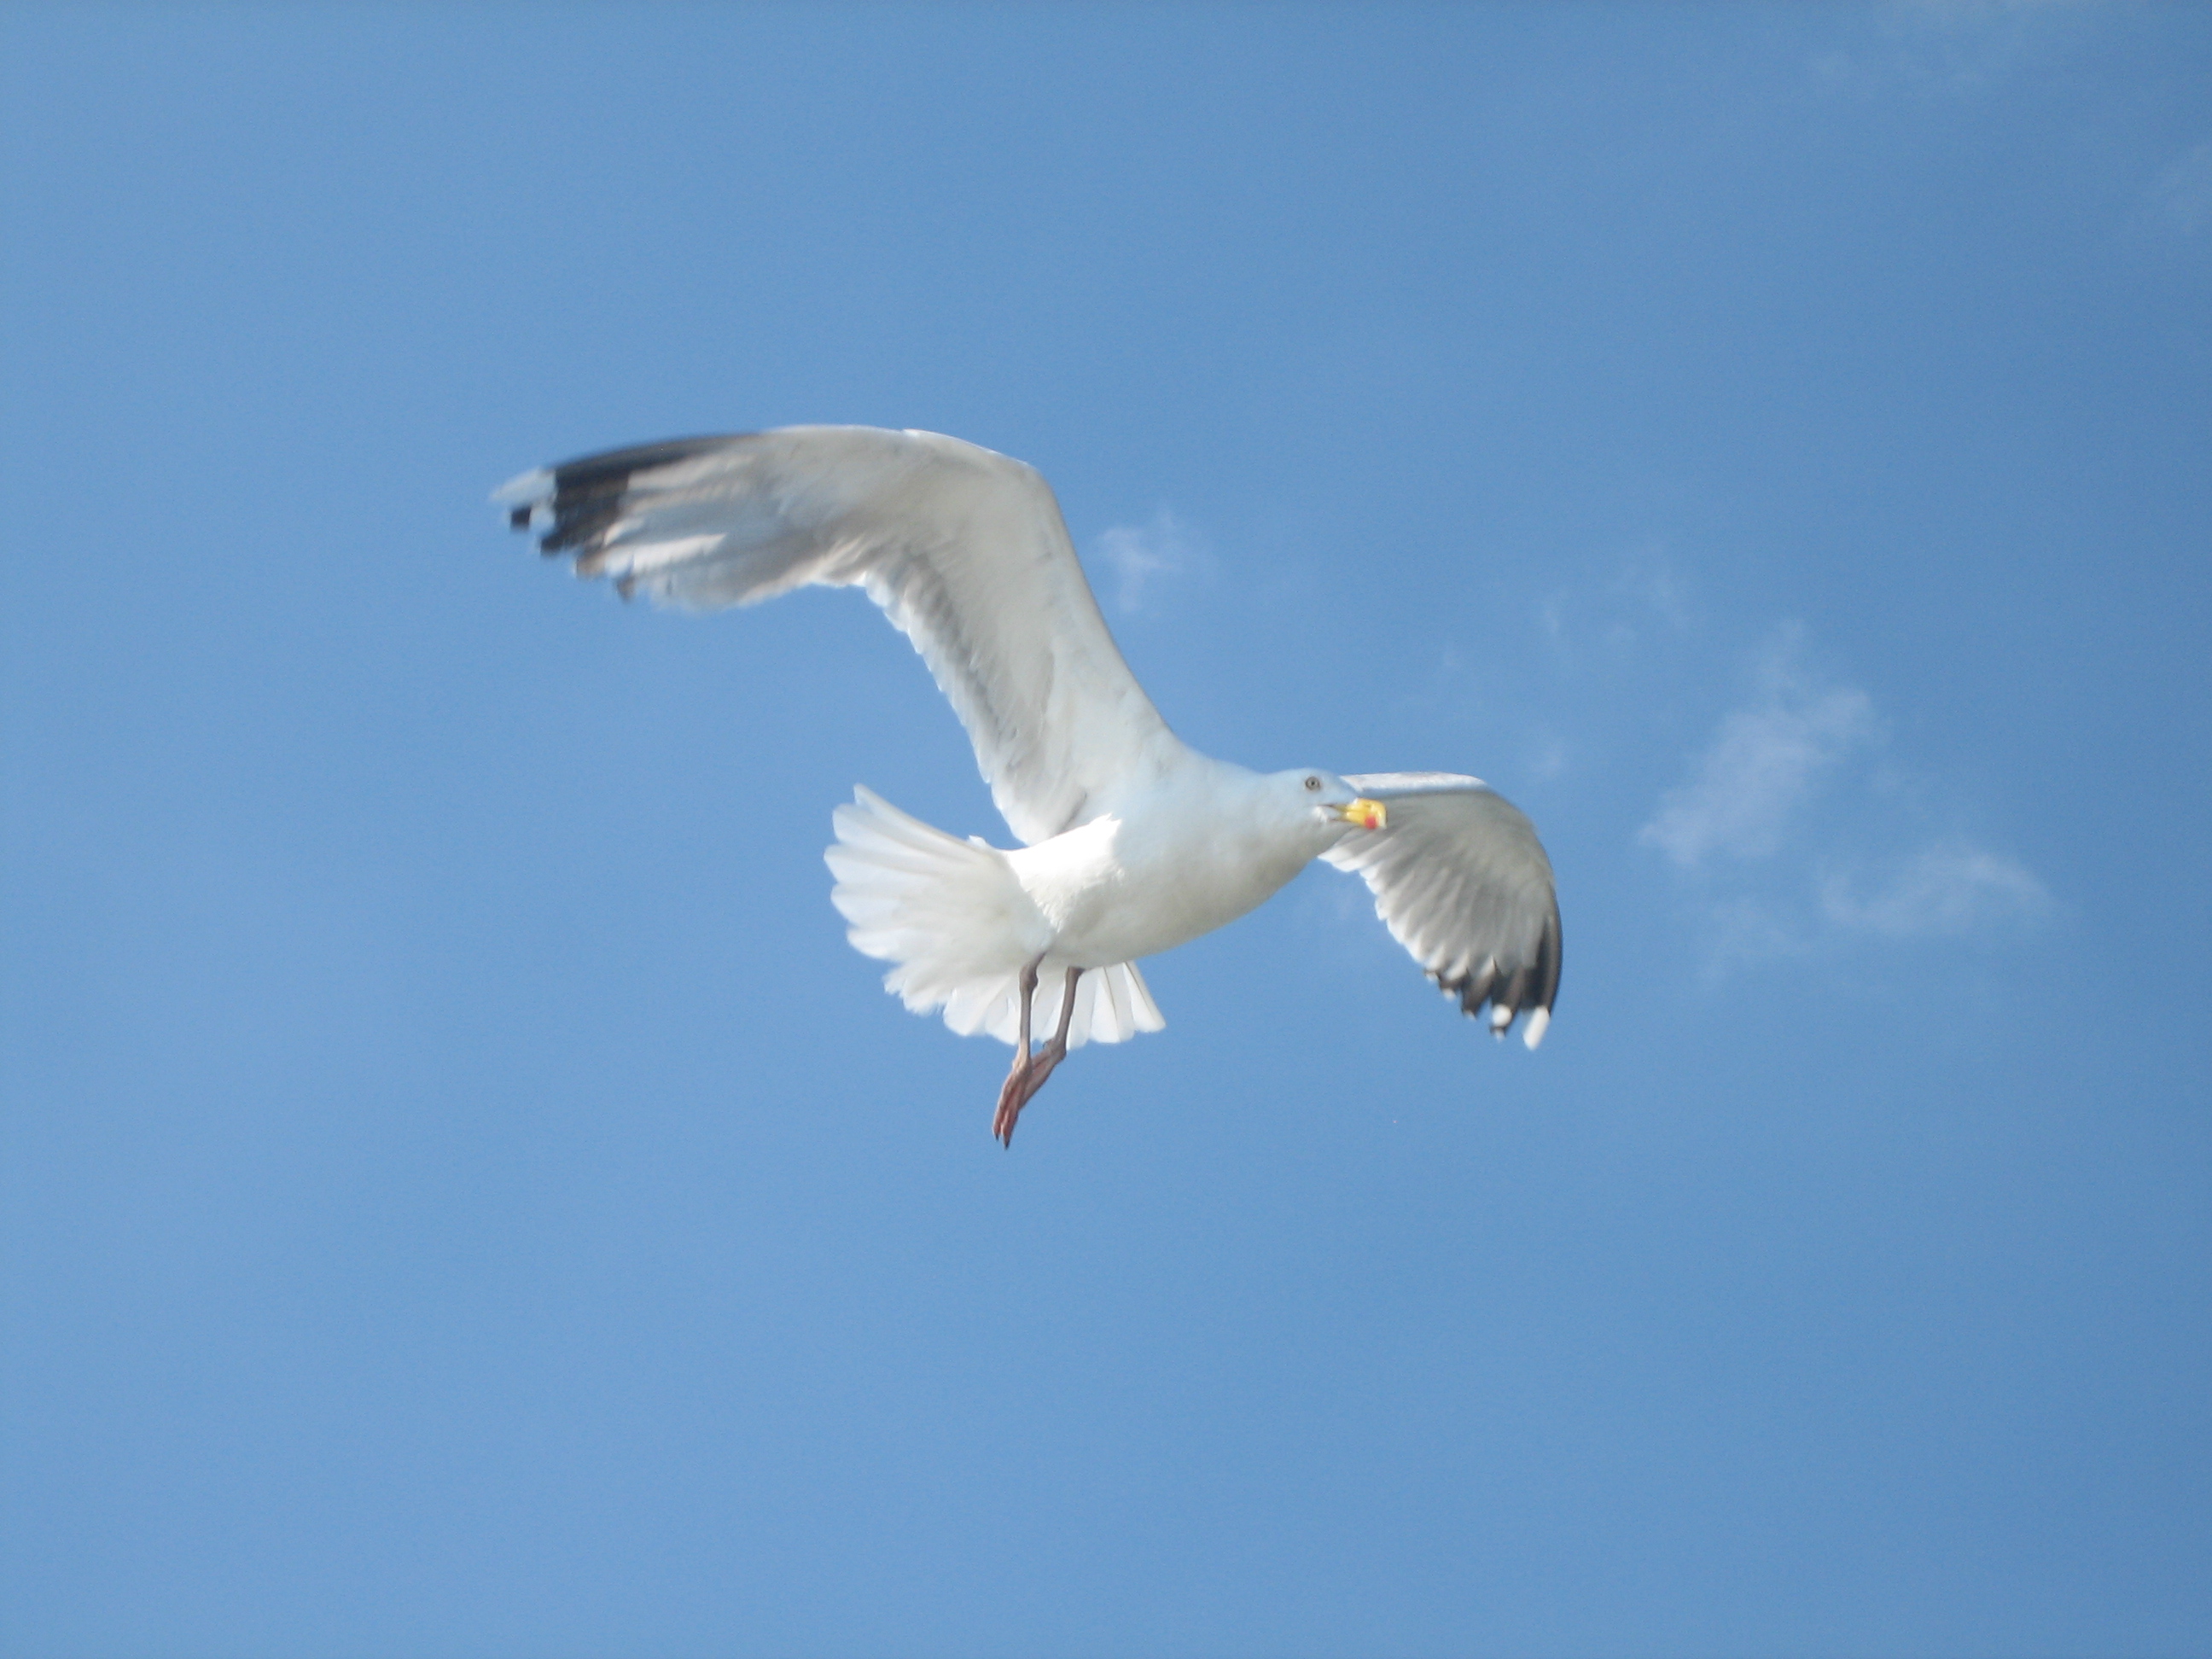 File:Seagull.jpg - Wikimedia Commons